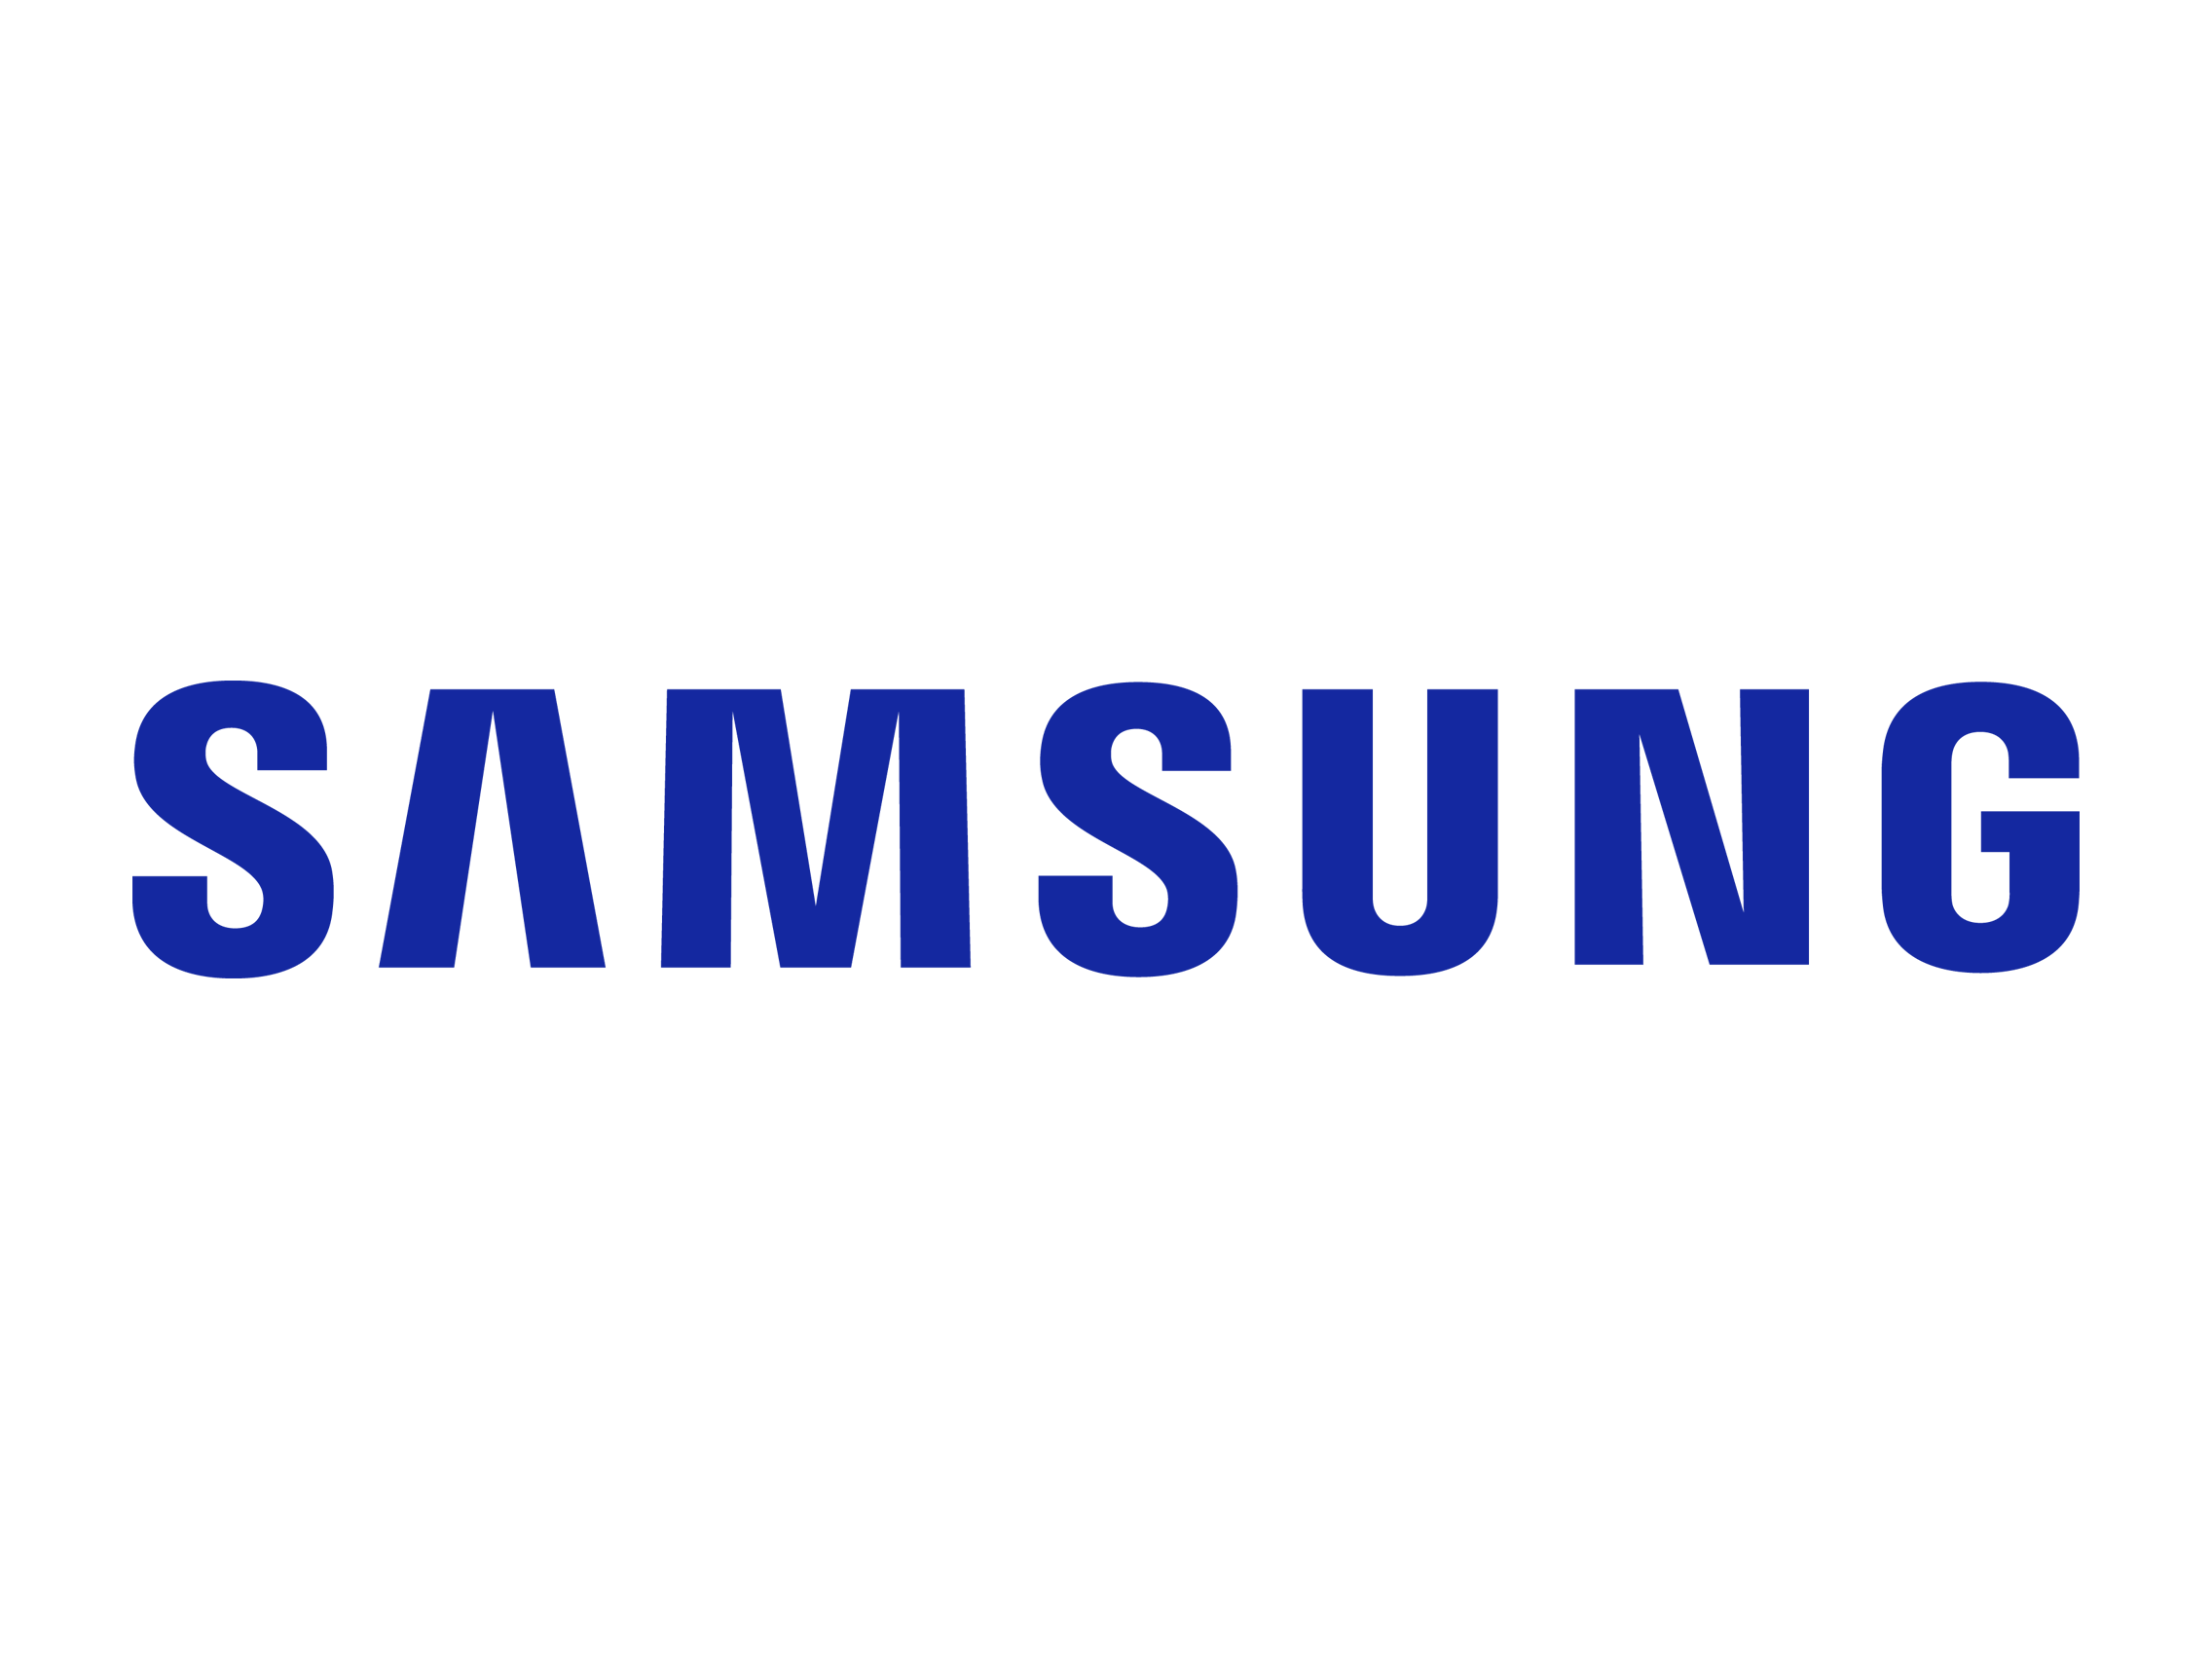 Small Samsung Logo - Samsung logo PNG image